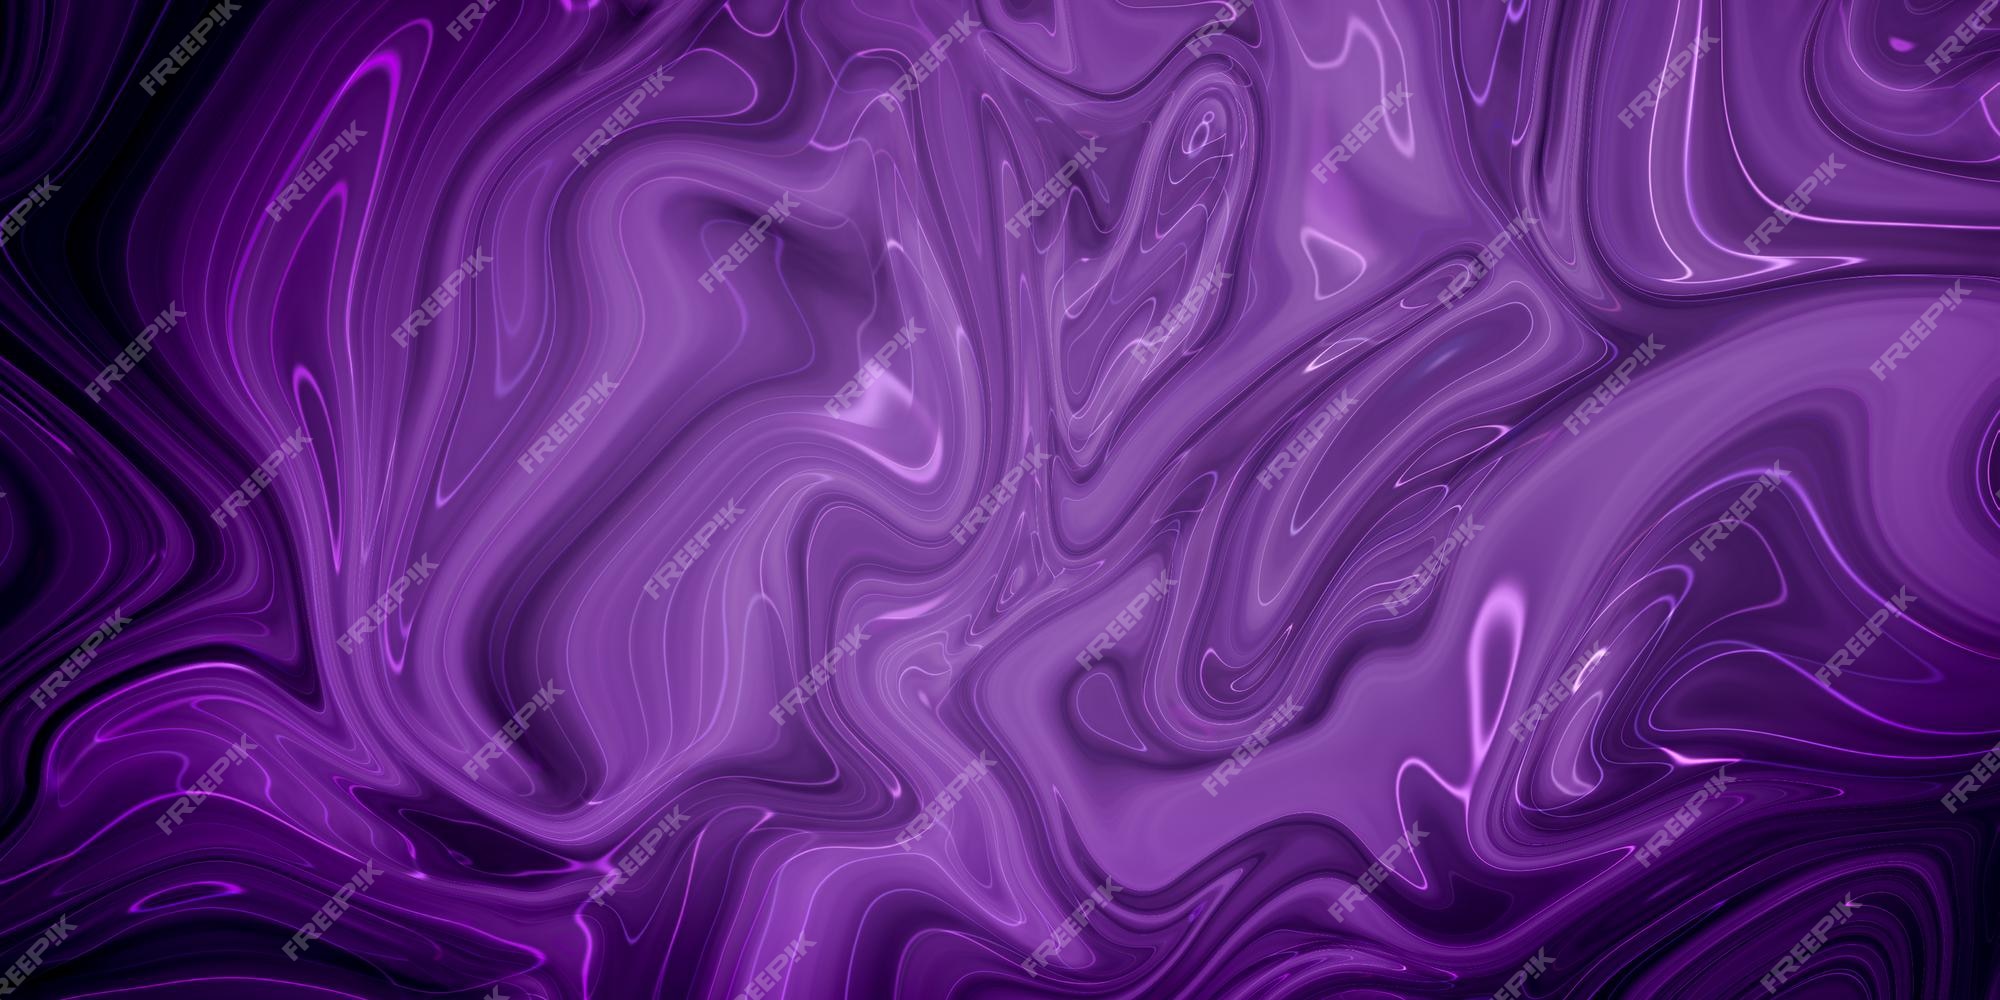 Purple Color Images - Free Download on Freepik